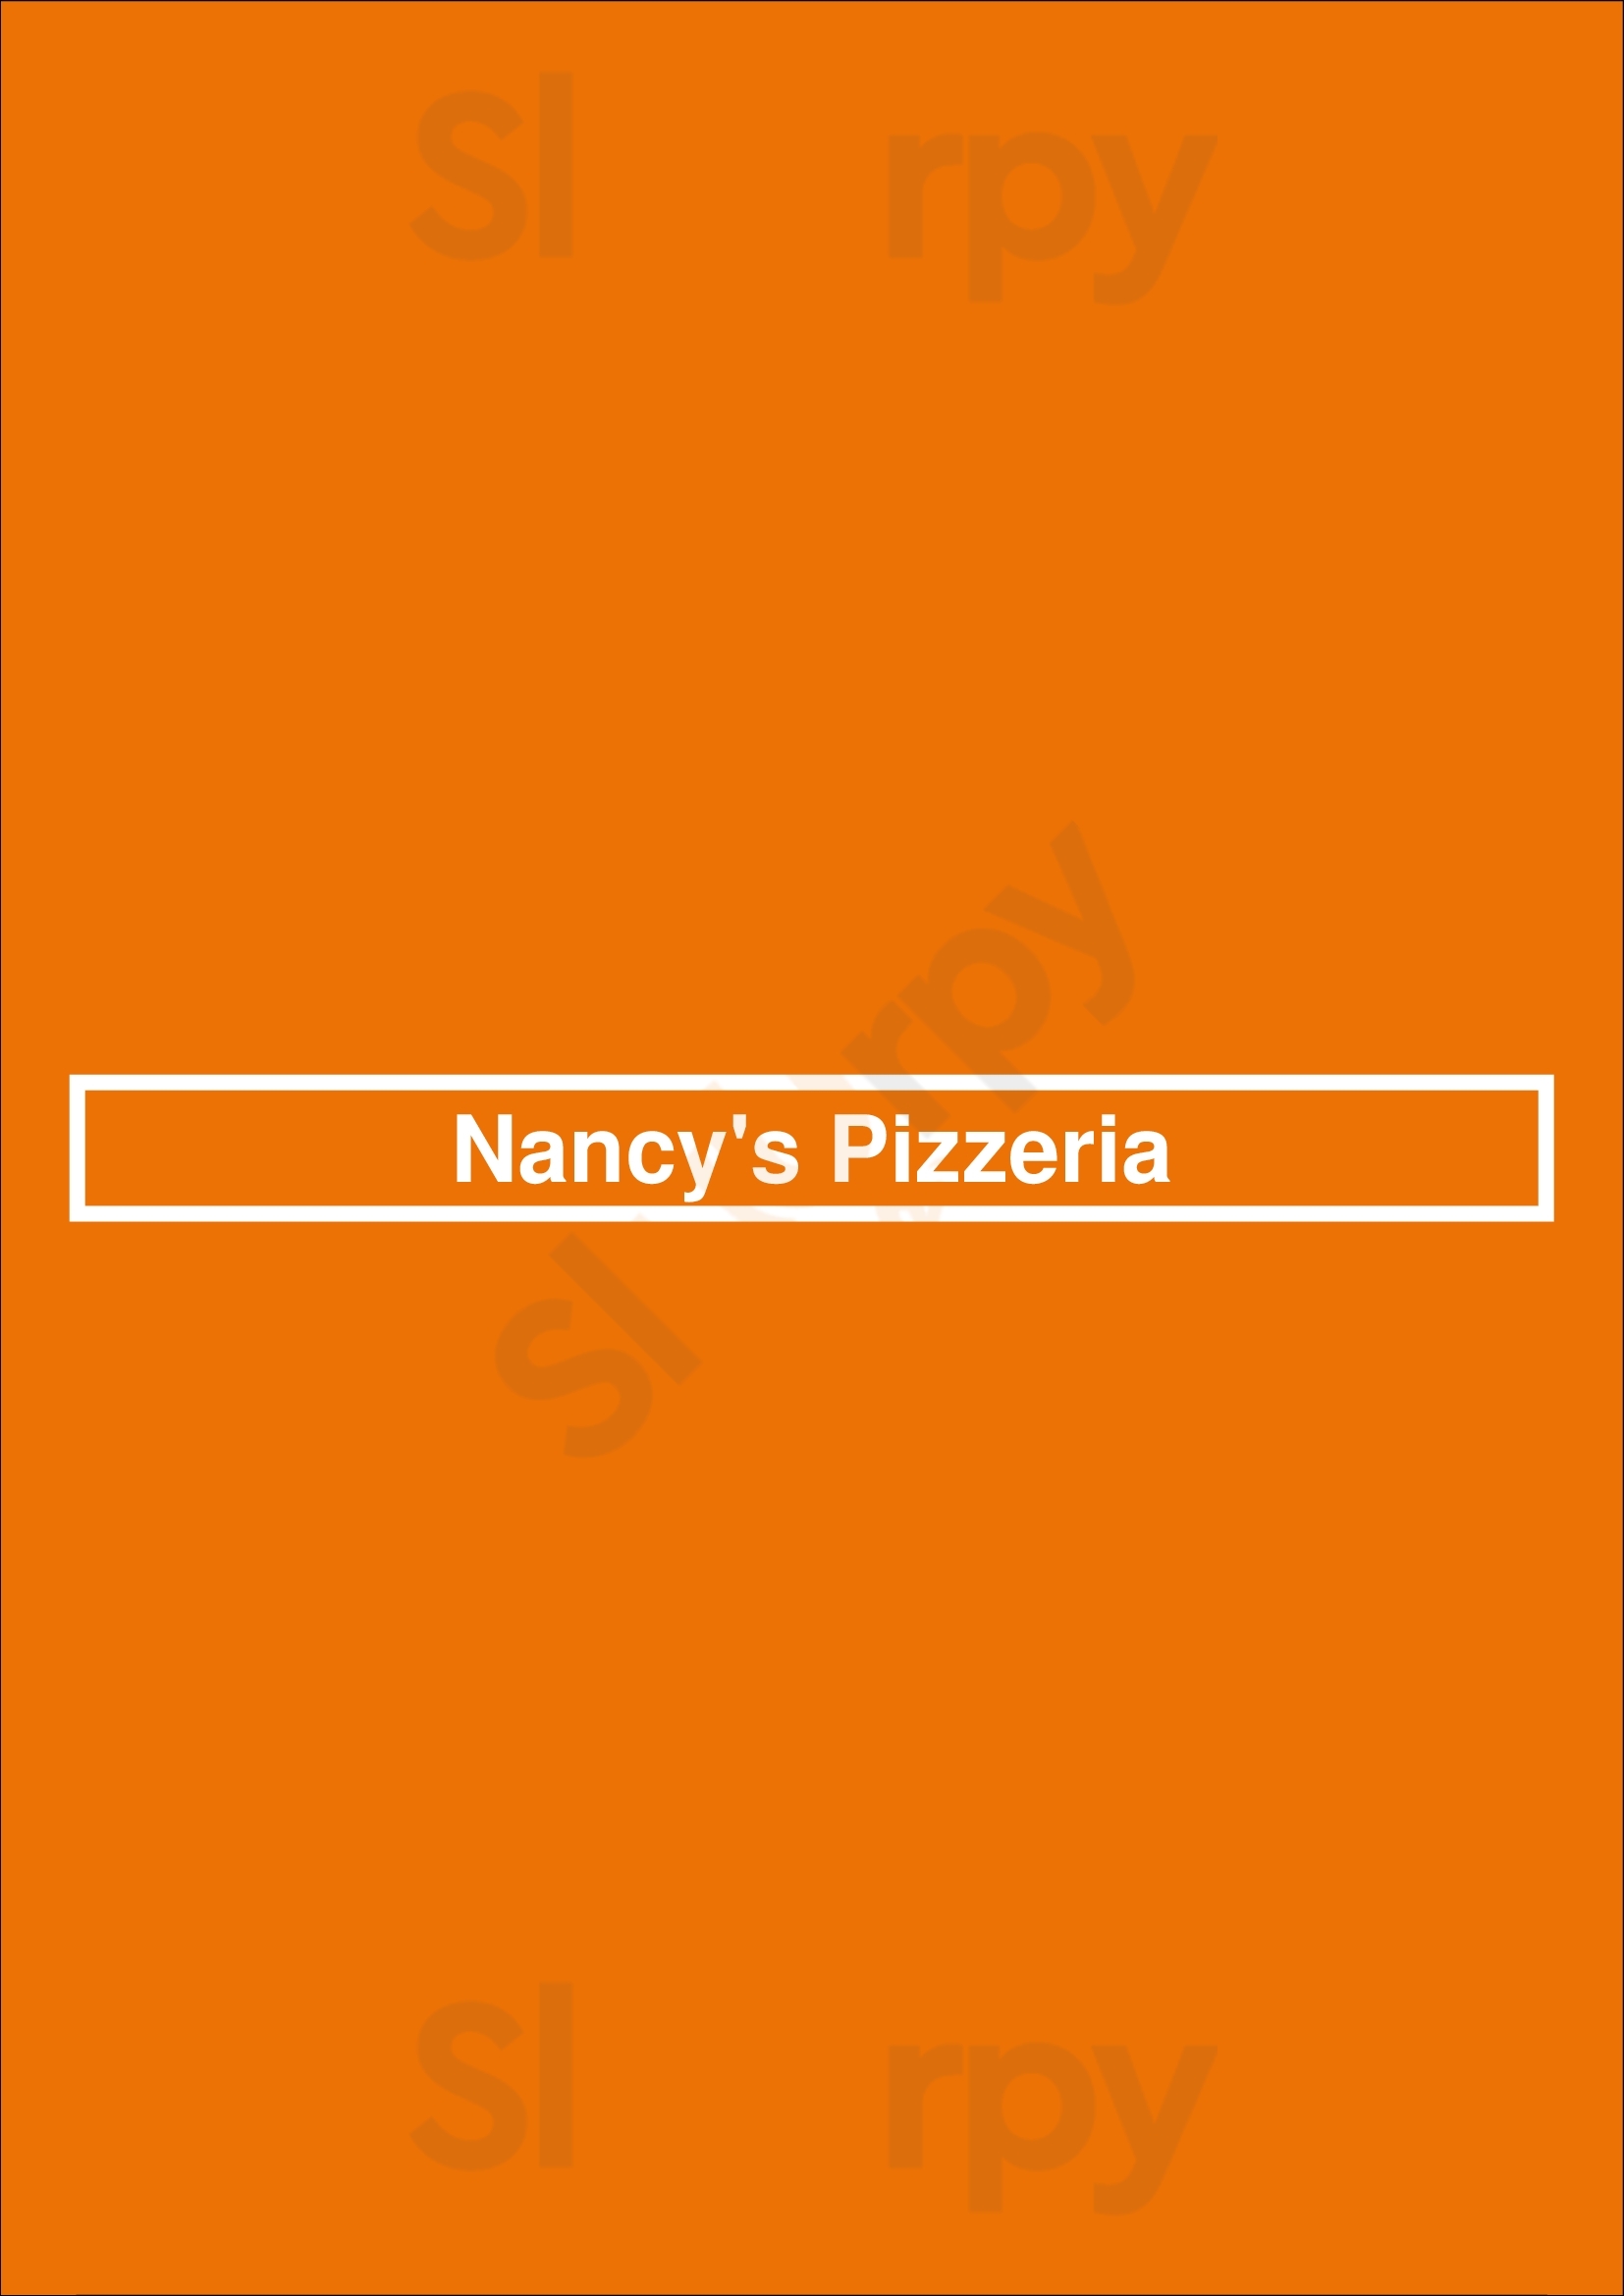 Nancy's Pizzeria Raleigh Menu - 1